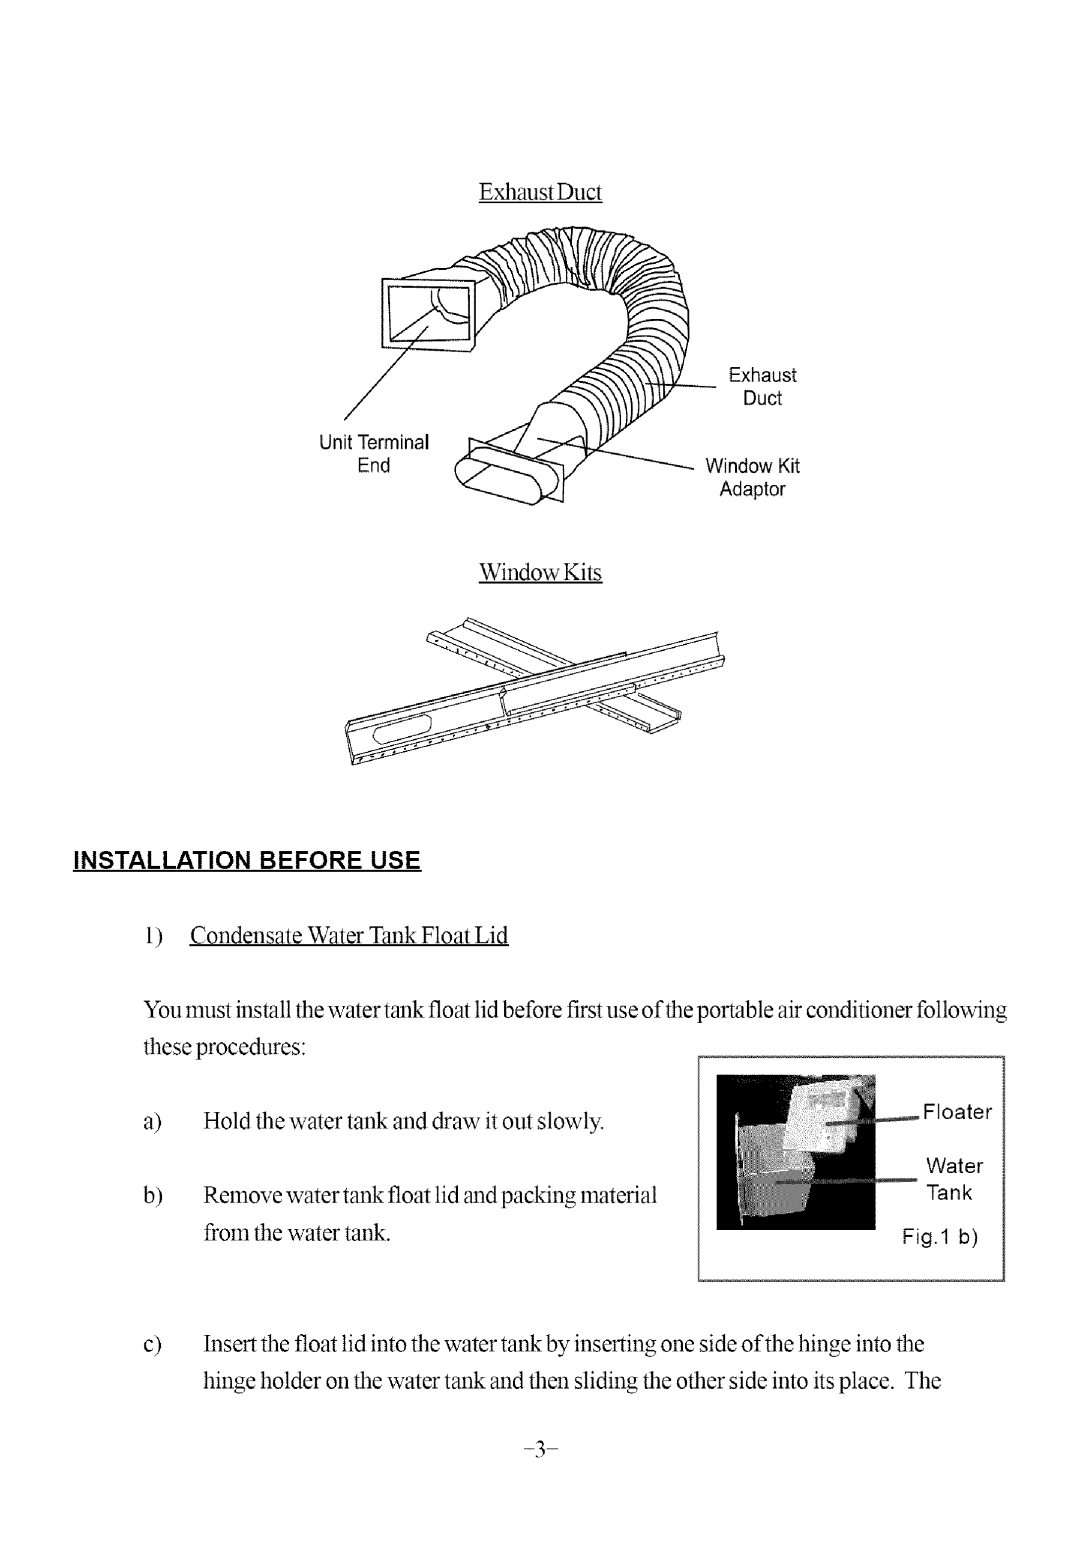 Soleus Air KY-32U user manual WindowKits, Exhaust Duct, Installation Before Use 